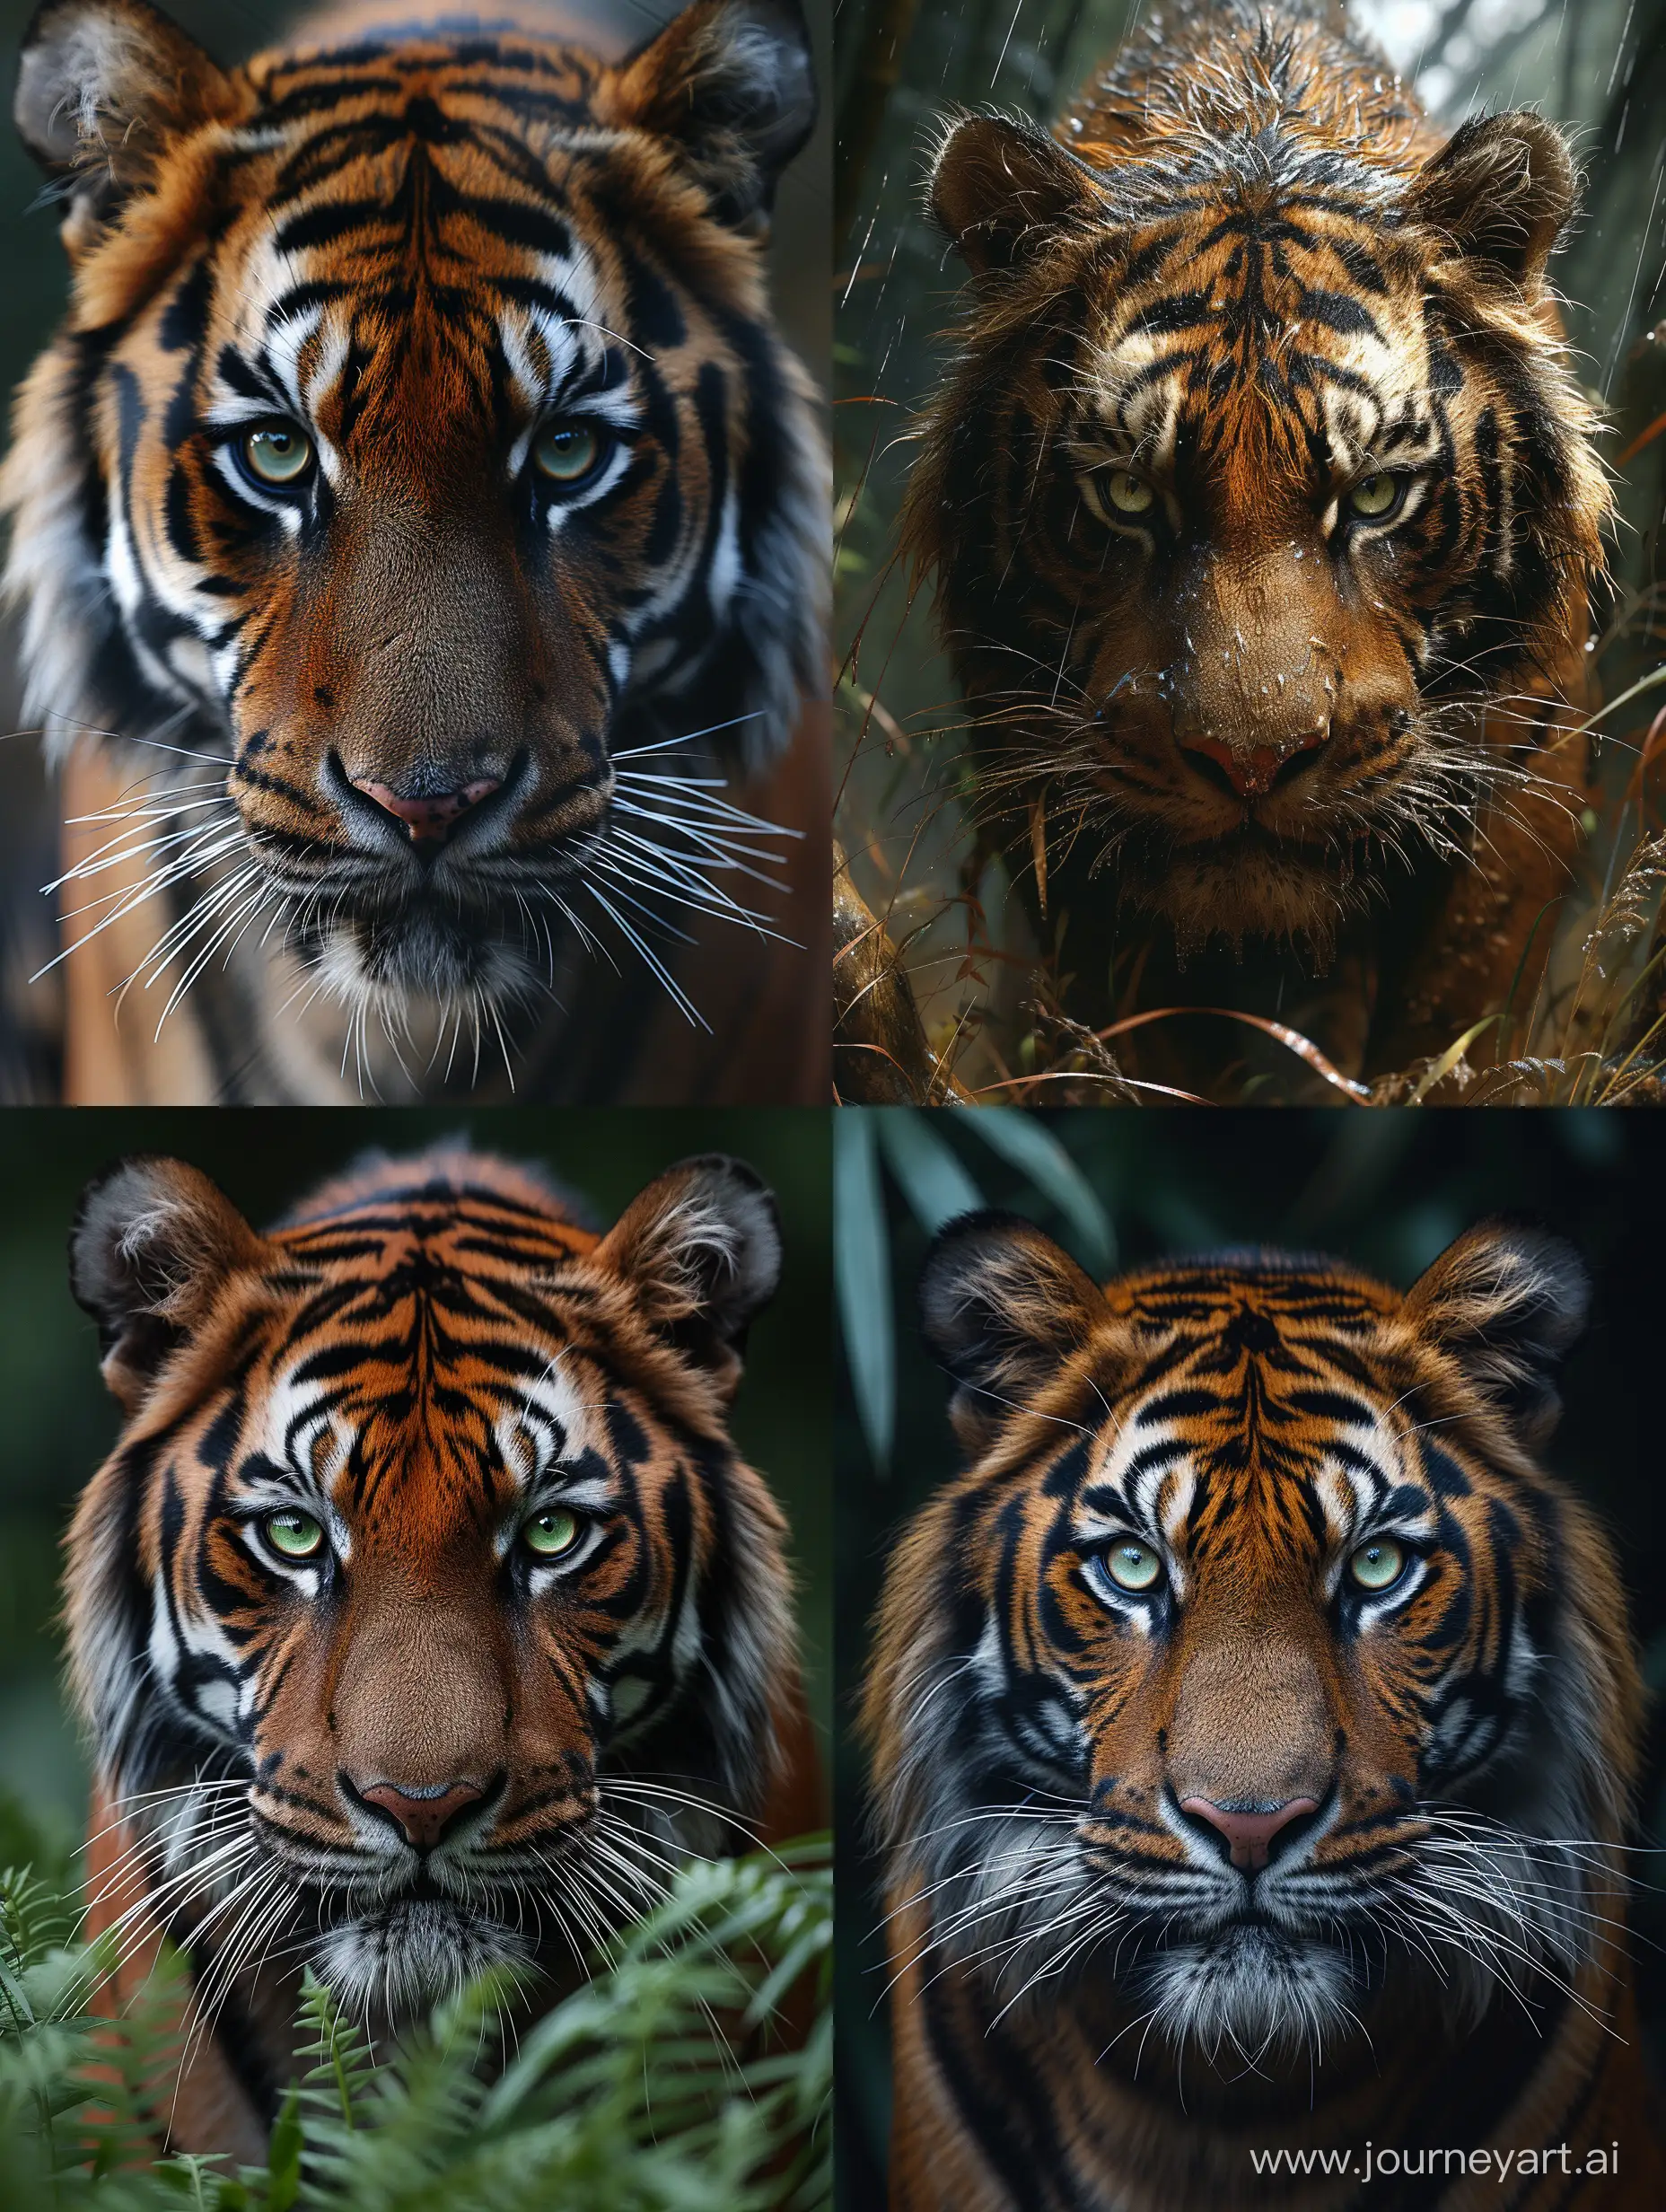 Majestic-Tiger-Stalking-Prey-in-Lush-Rainforest